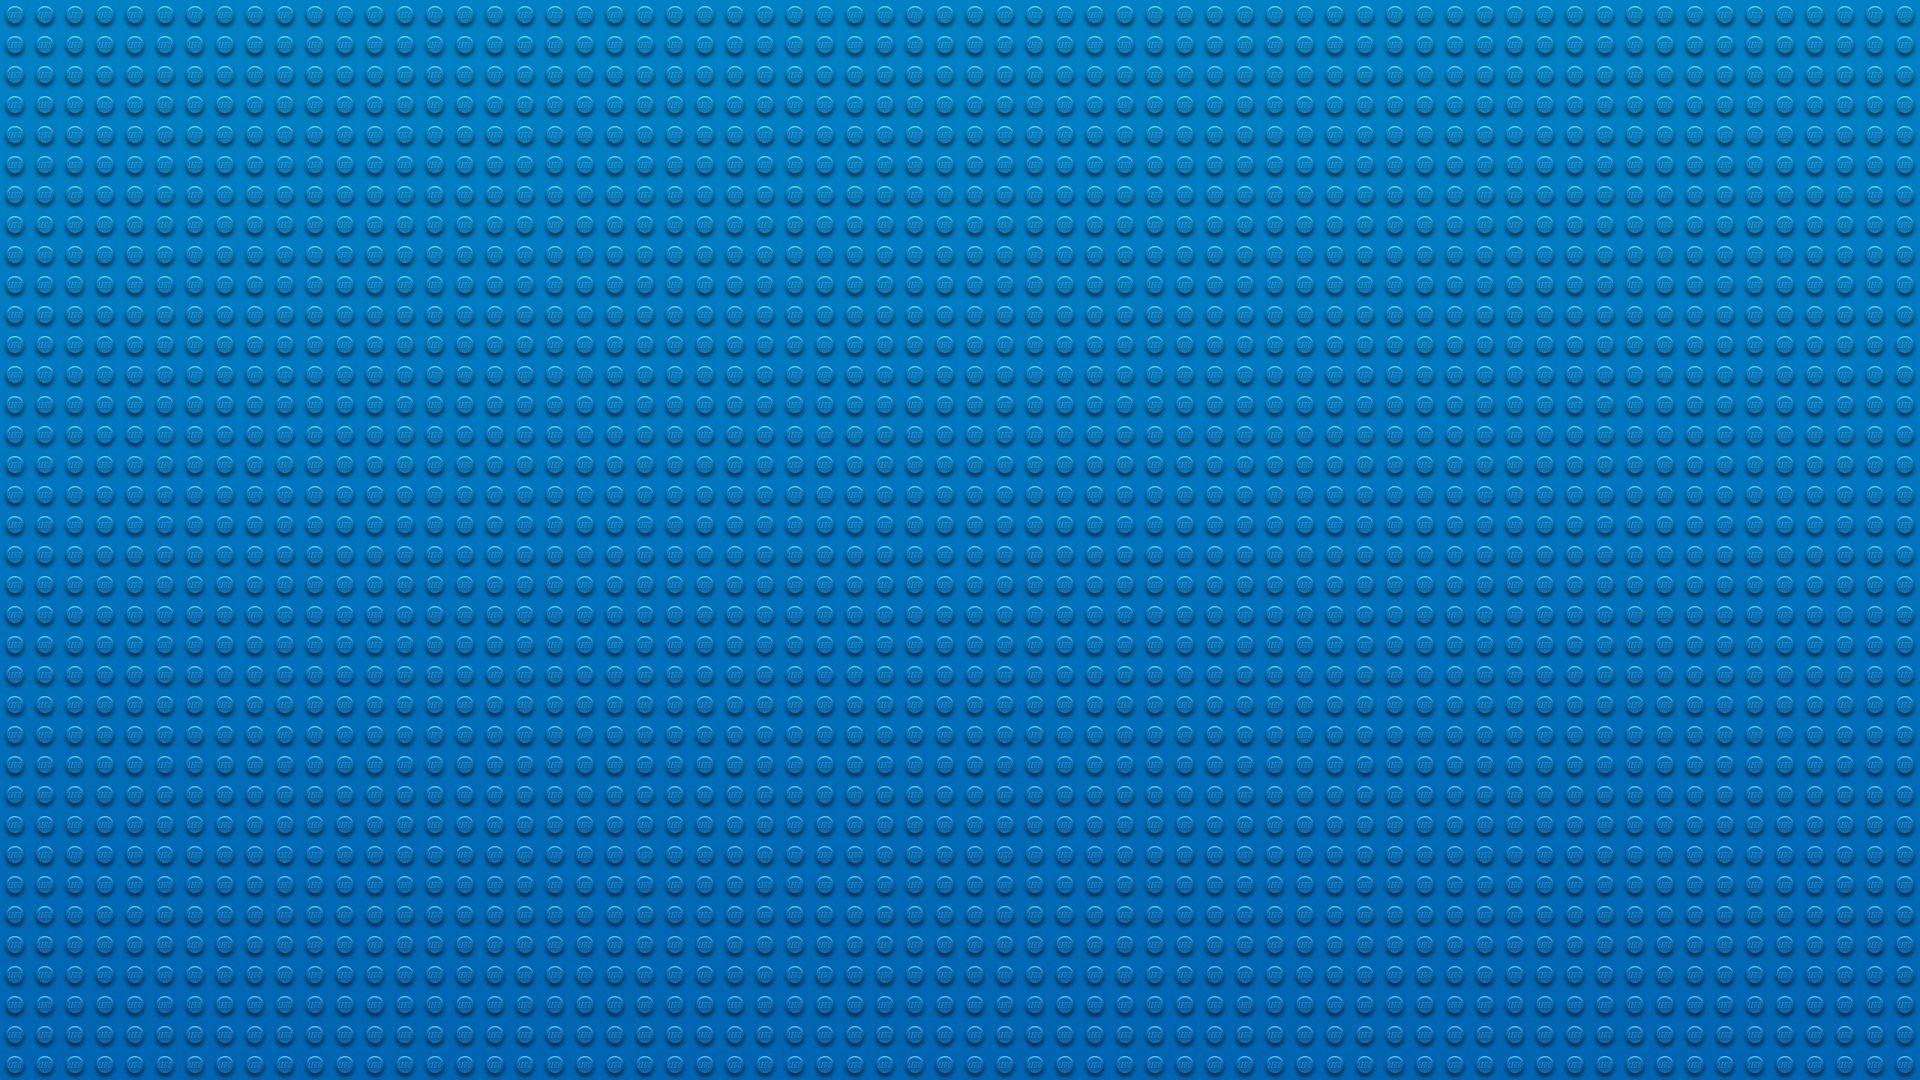 lego desktop wallpaper